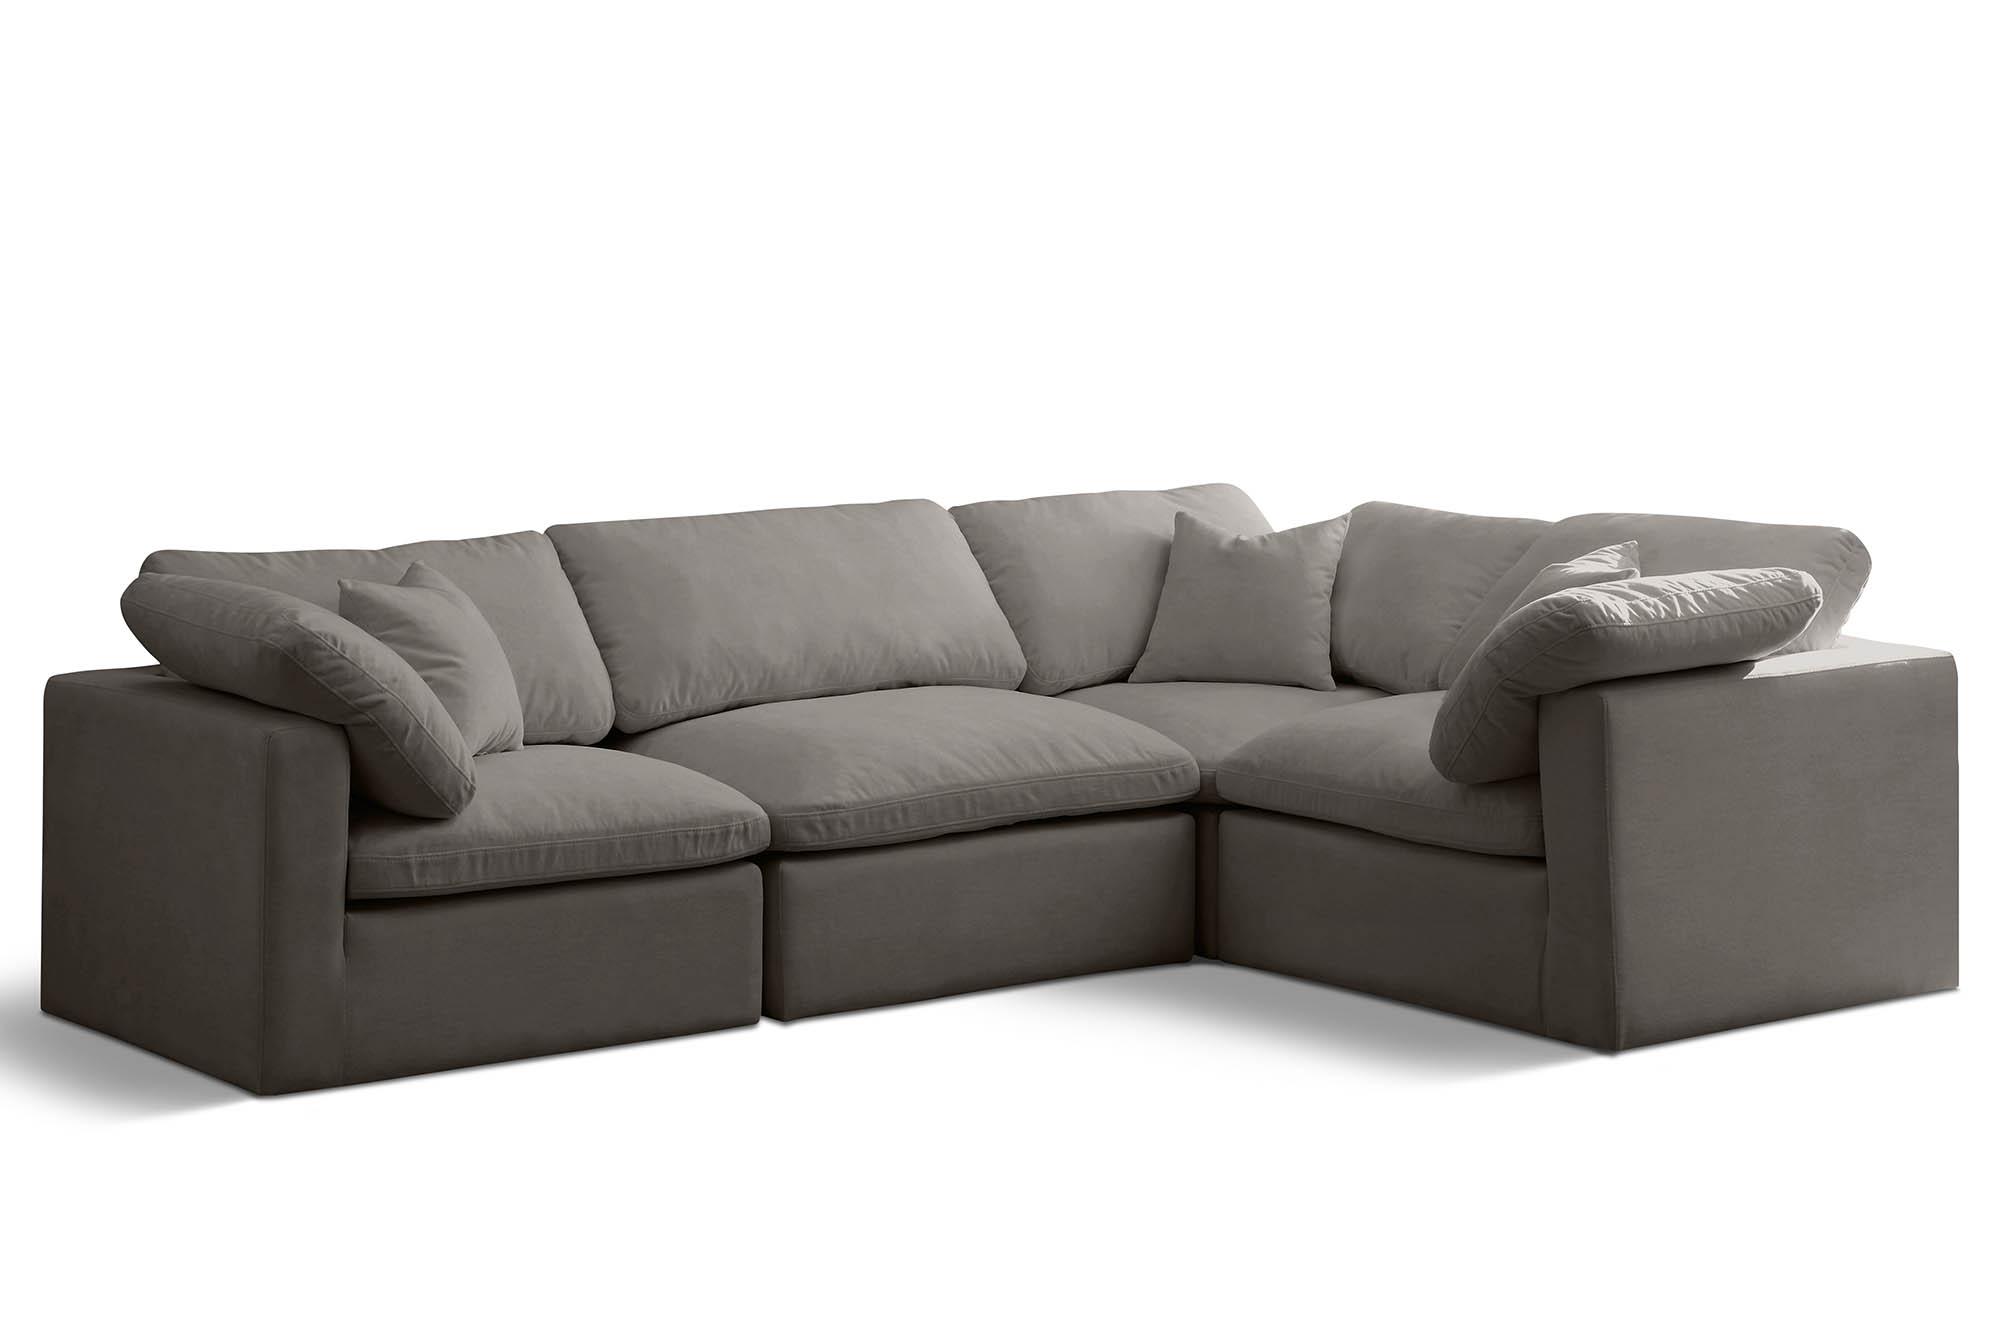 Contemporary, Modern Modular Sectional Sofa 602Grey-Sec4C 602Grey-Sec4C in Gray Fabric